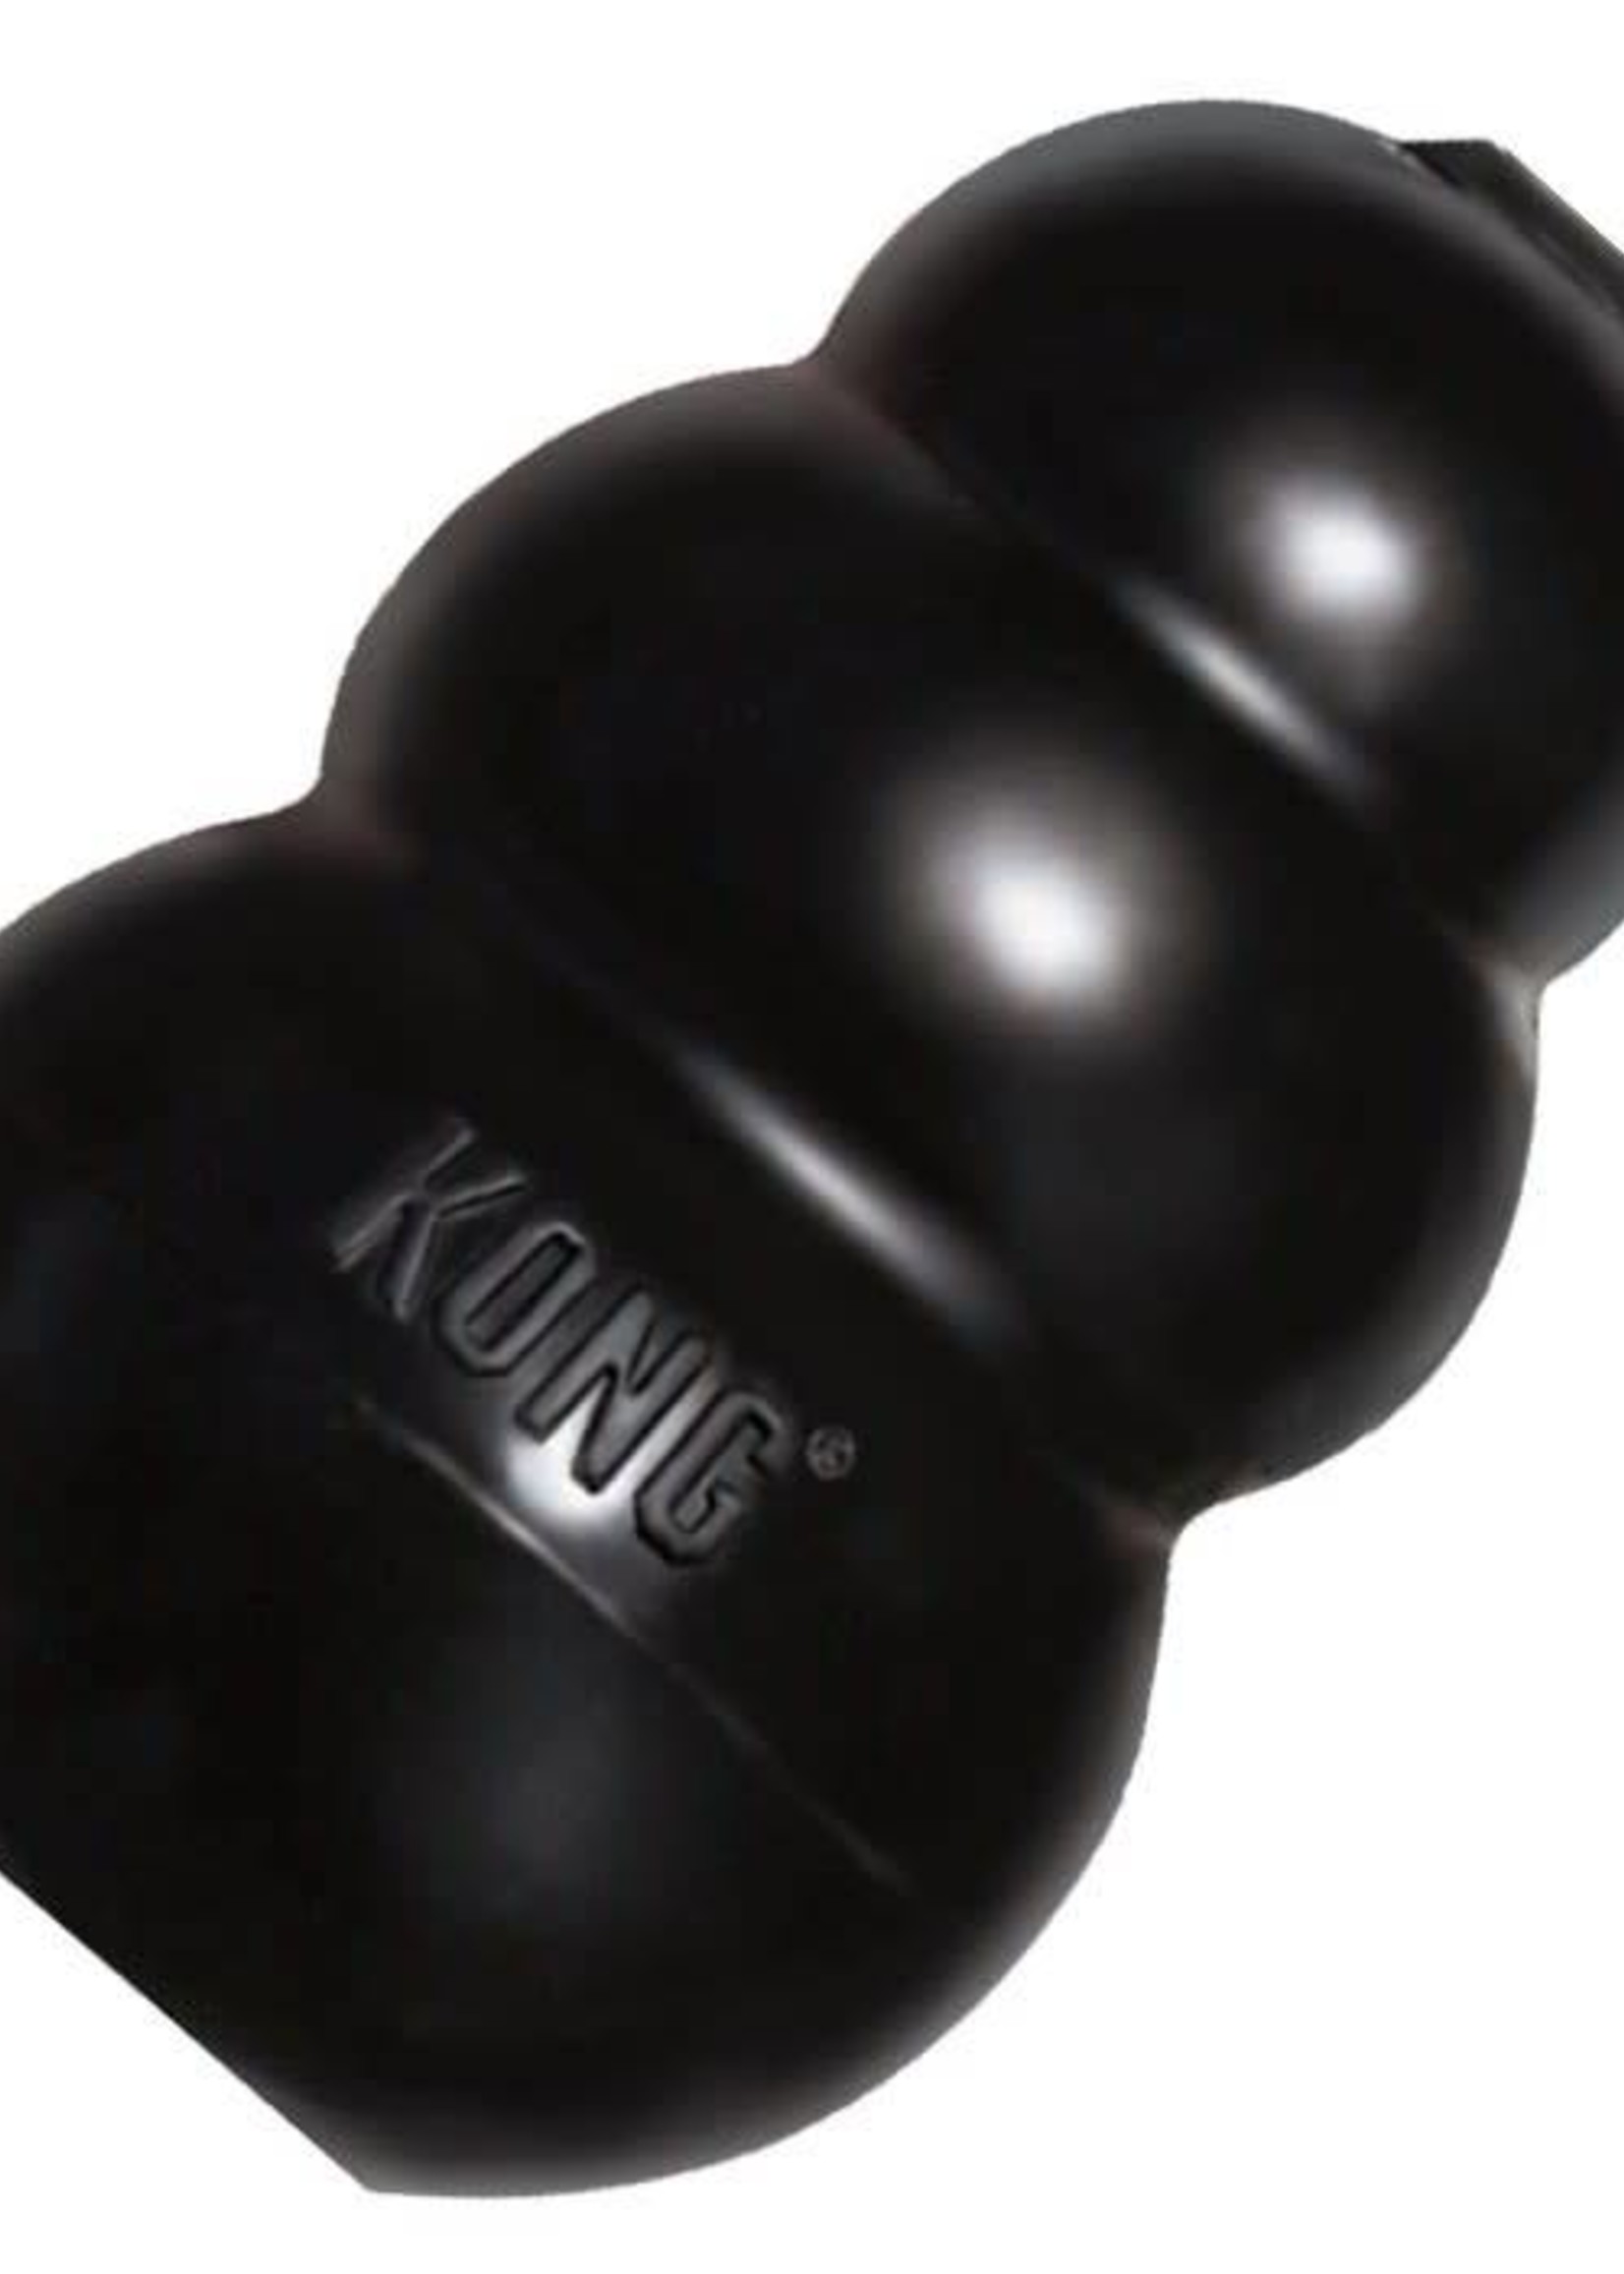 Kong Kong Xtreme -Large